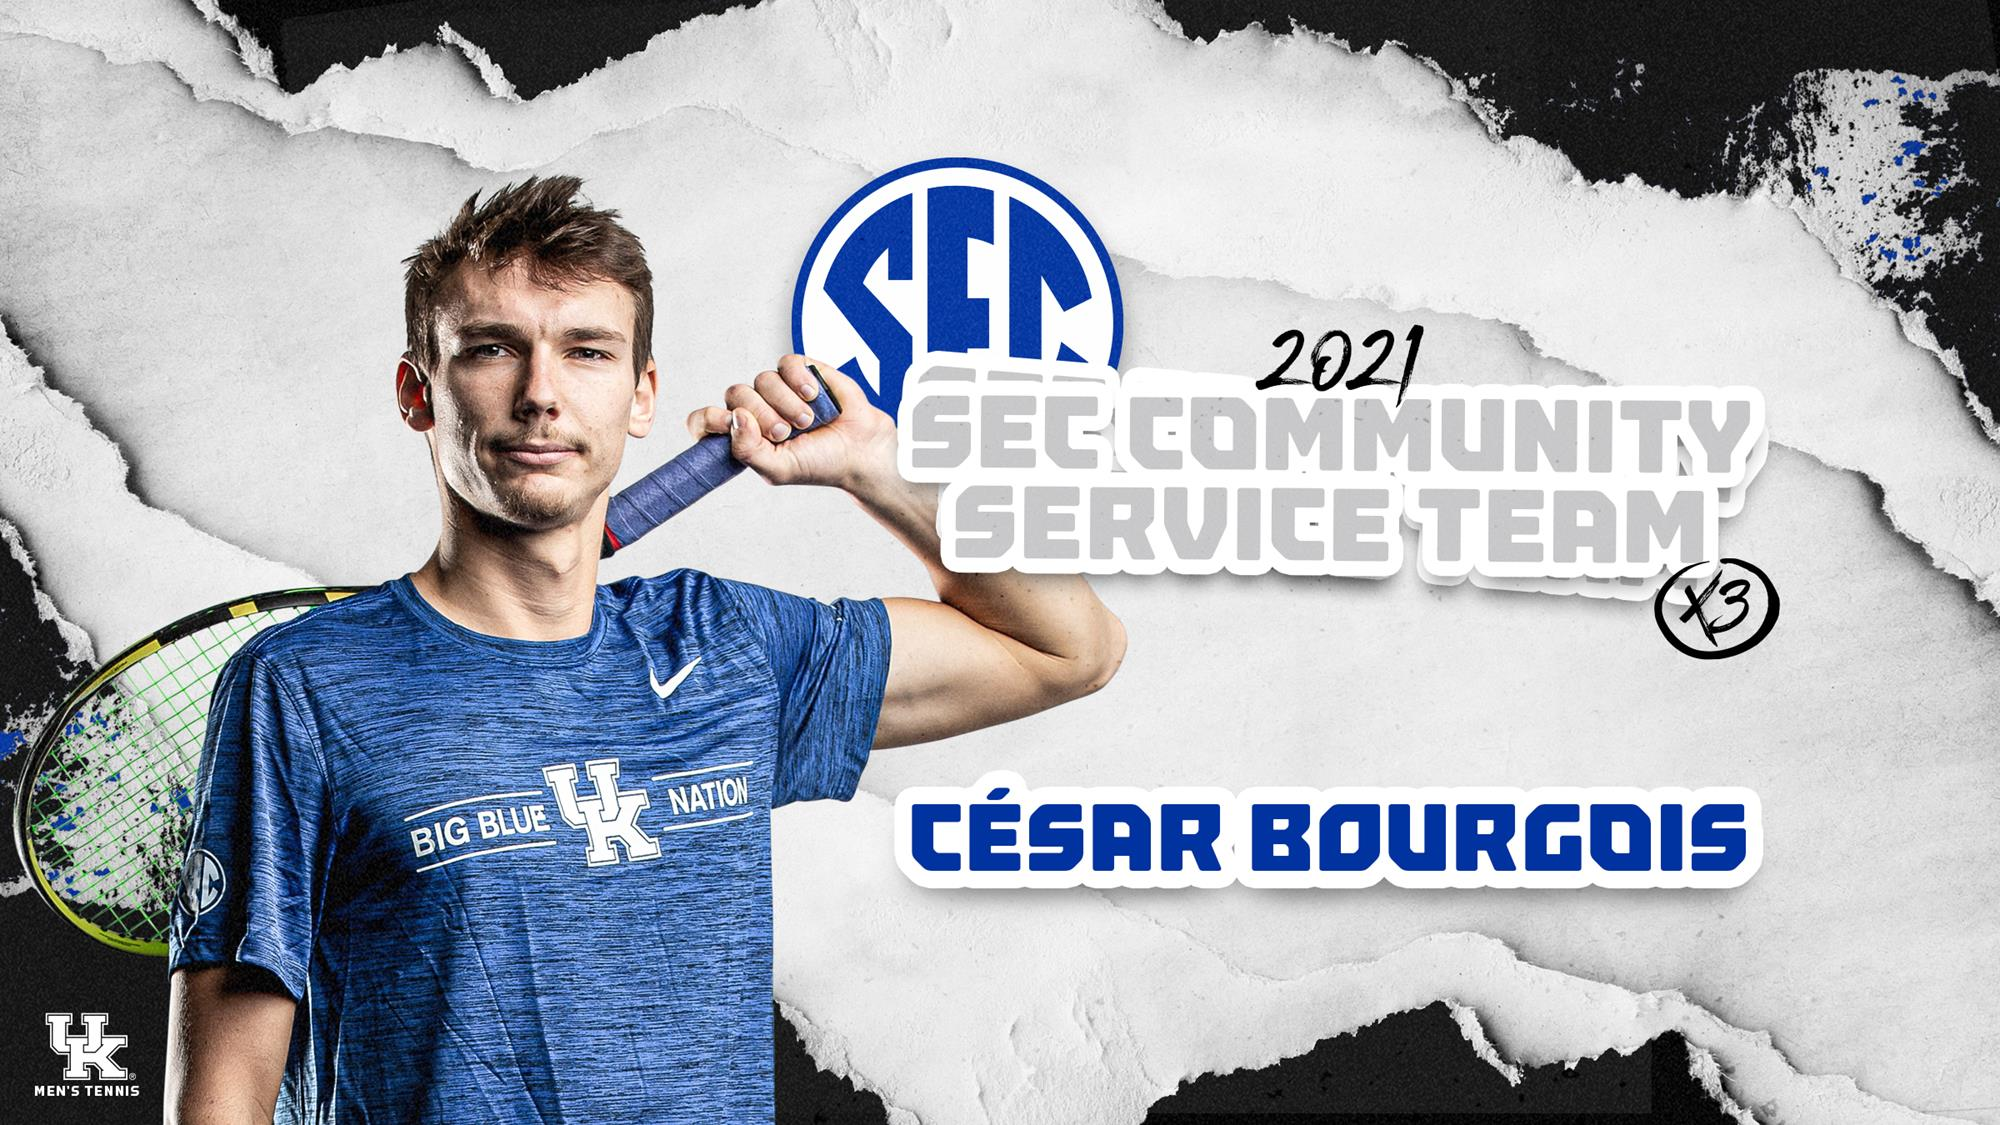 César Bourgois Named to 2021 SEC Community Service Team